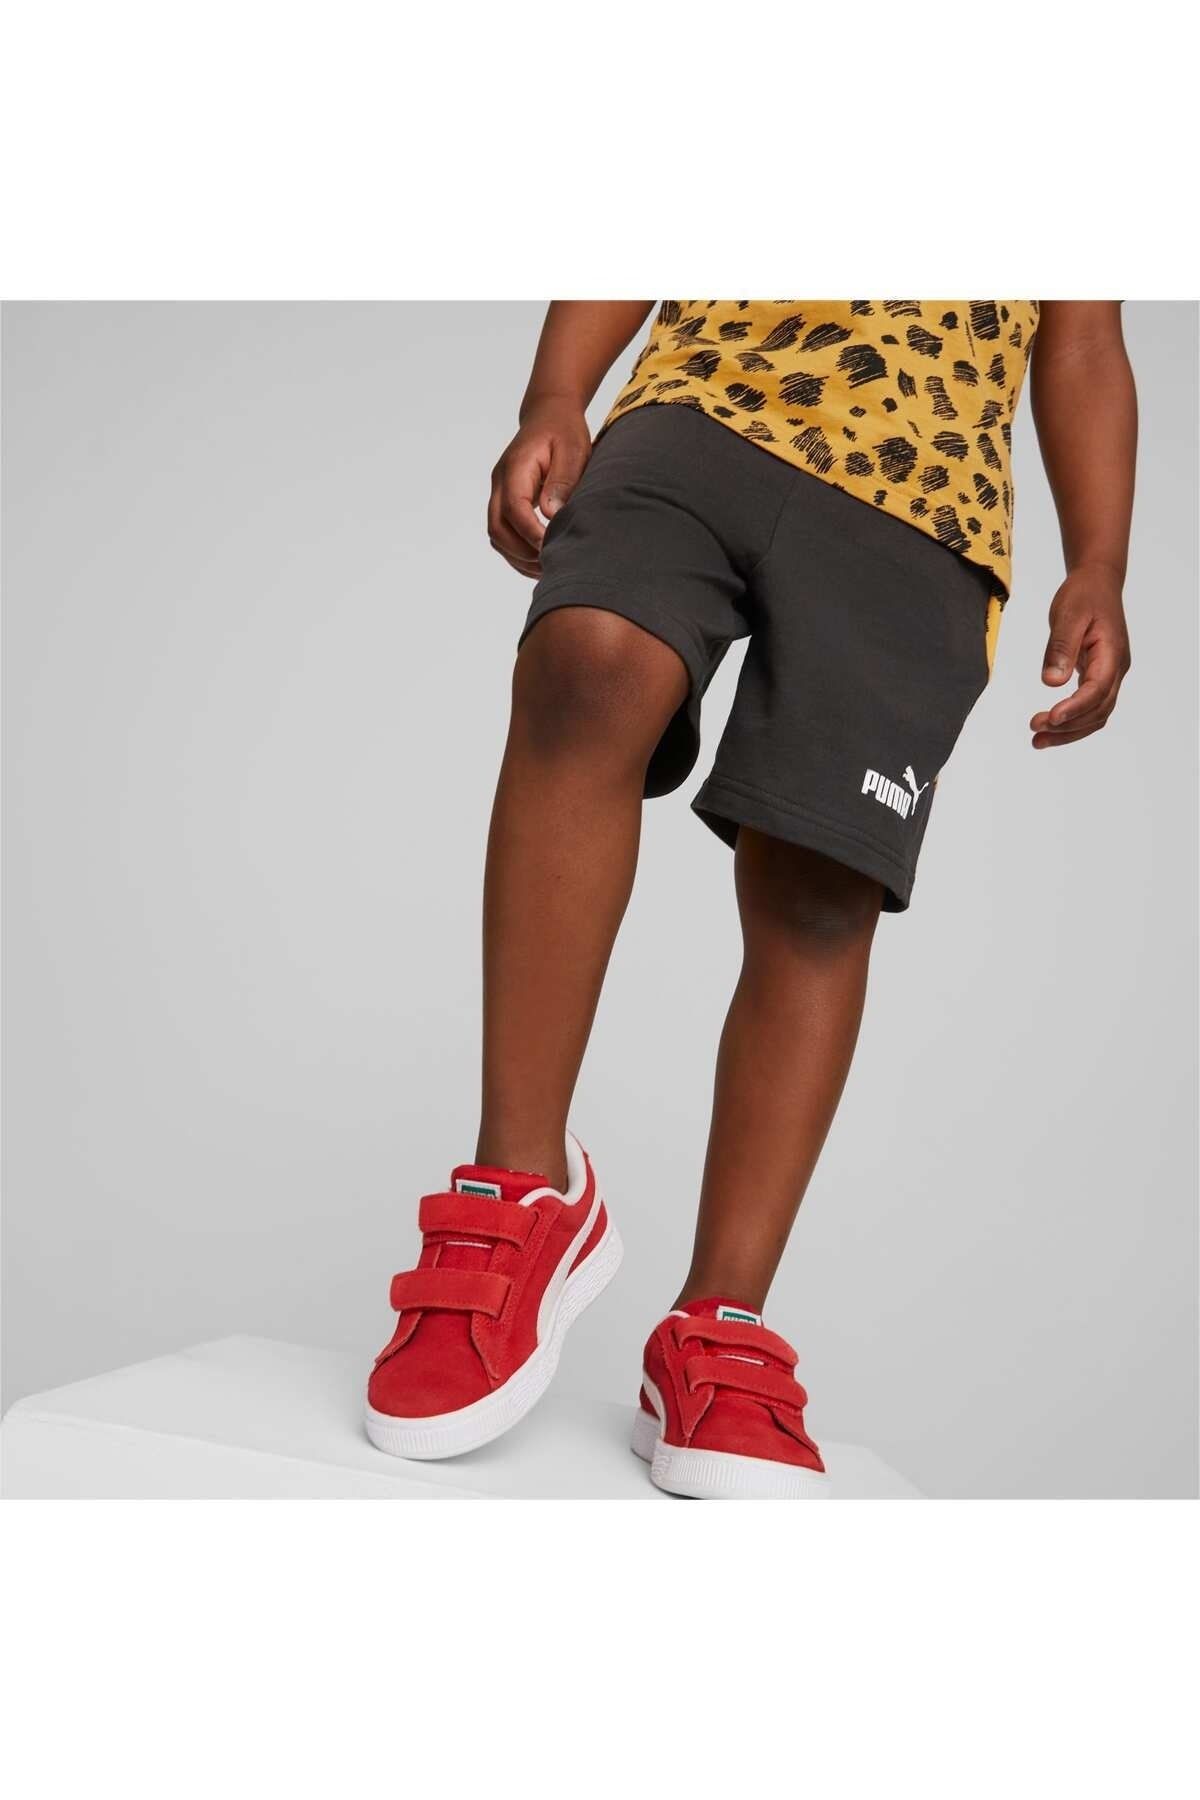 Puma Sports Shorts - Black - Normal Waist - Trendyol